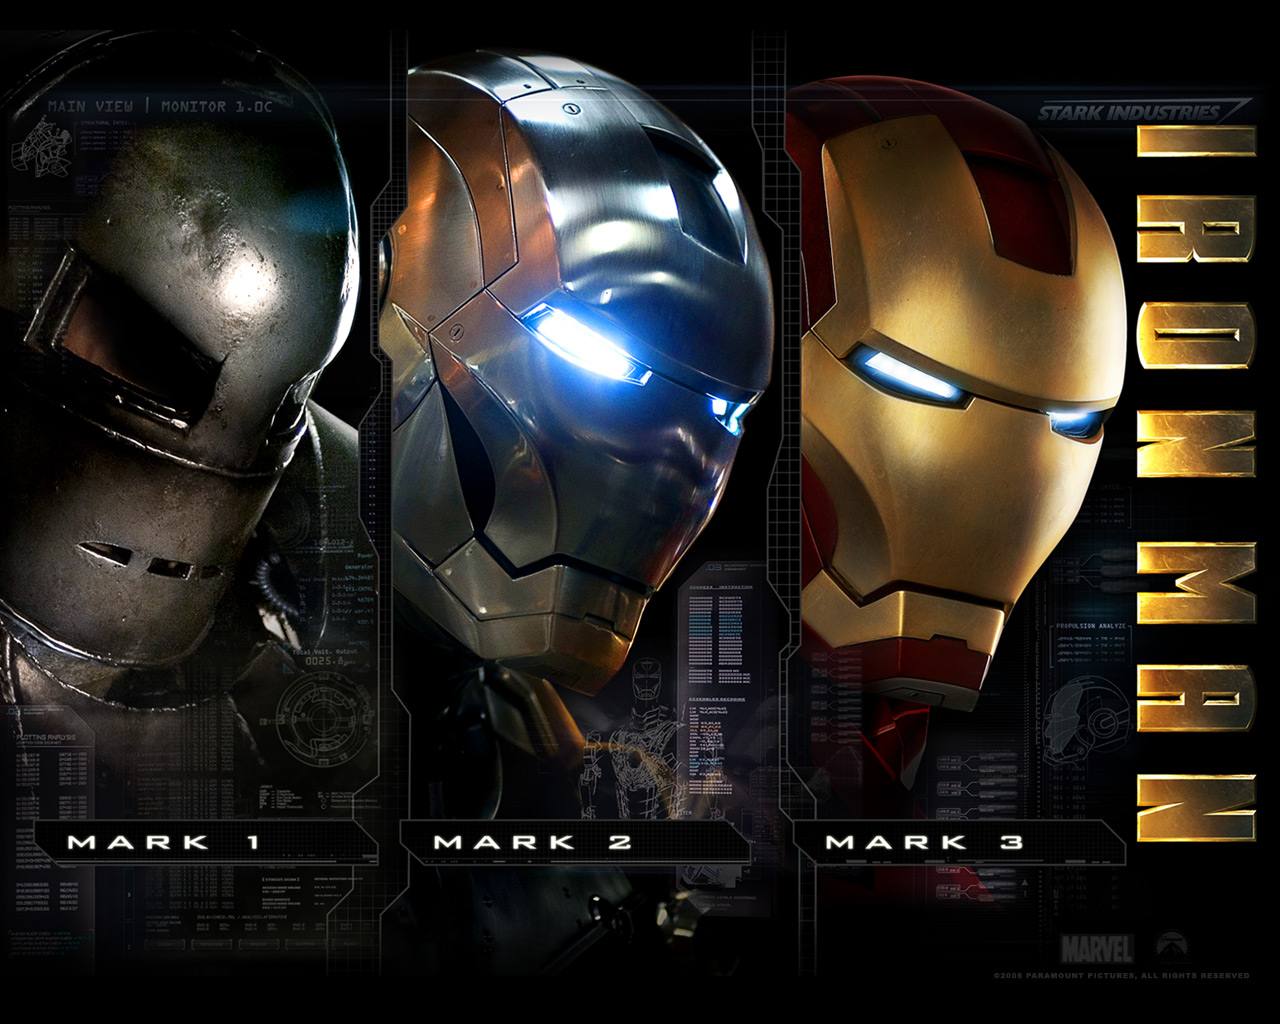 Download HQ Iron Man wallpaper / Movies / 1280x1024